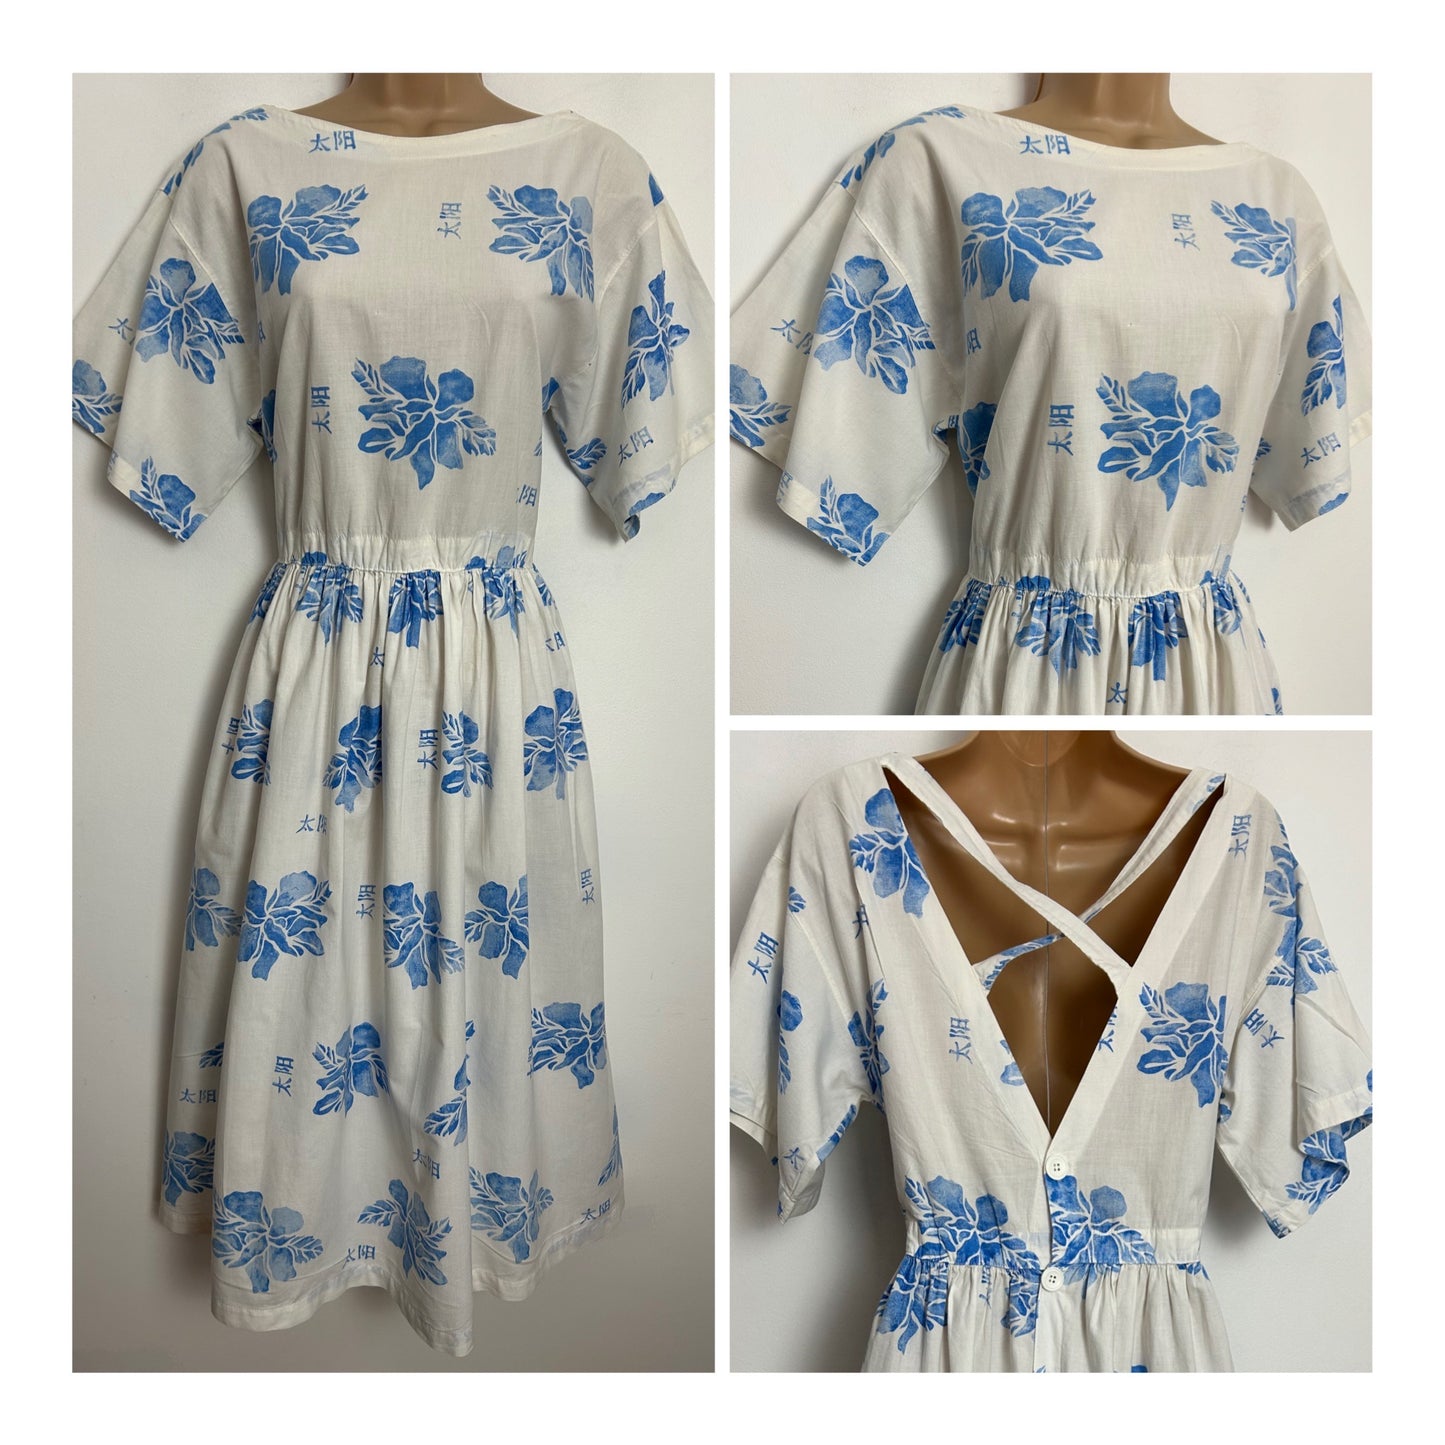 Vintage 1980s UK Size 10 White & Blue Floral & Japanese Letters Short Sleeve Criss Cross Back Summer Cotton Dress